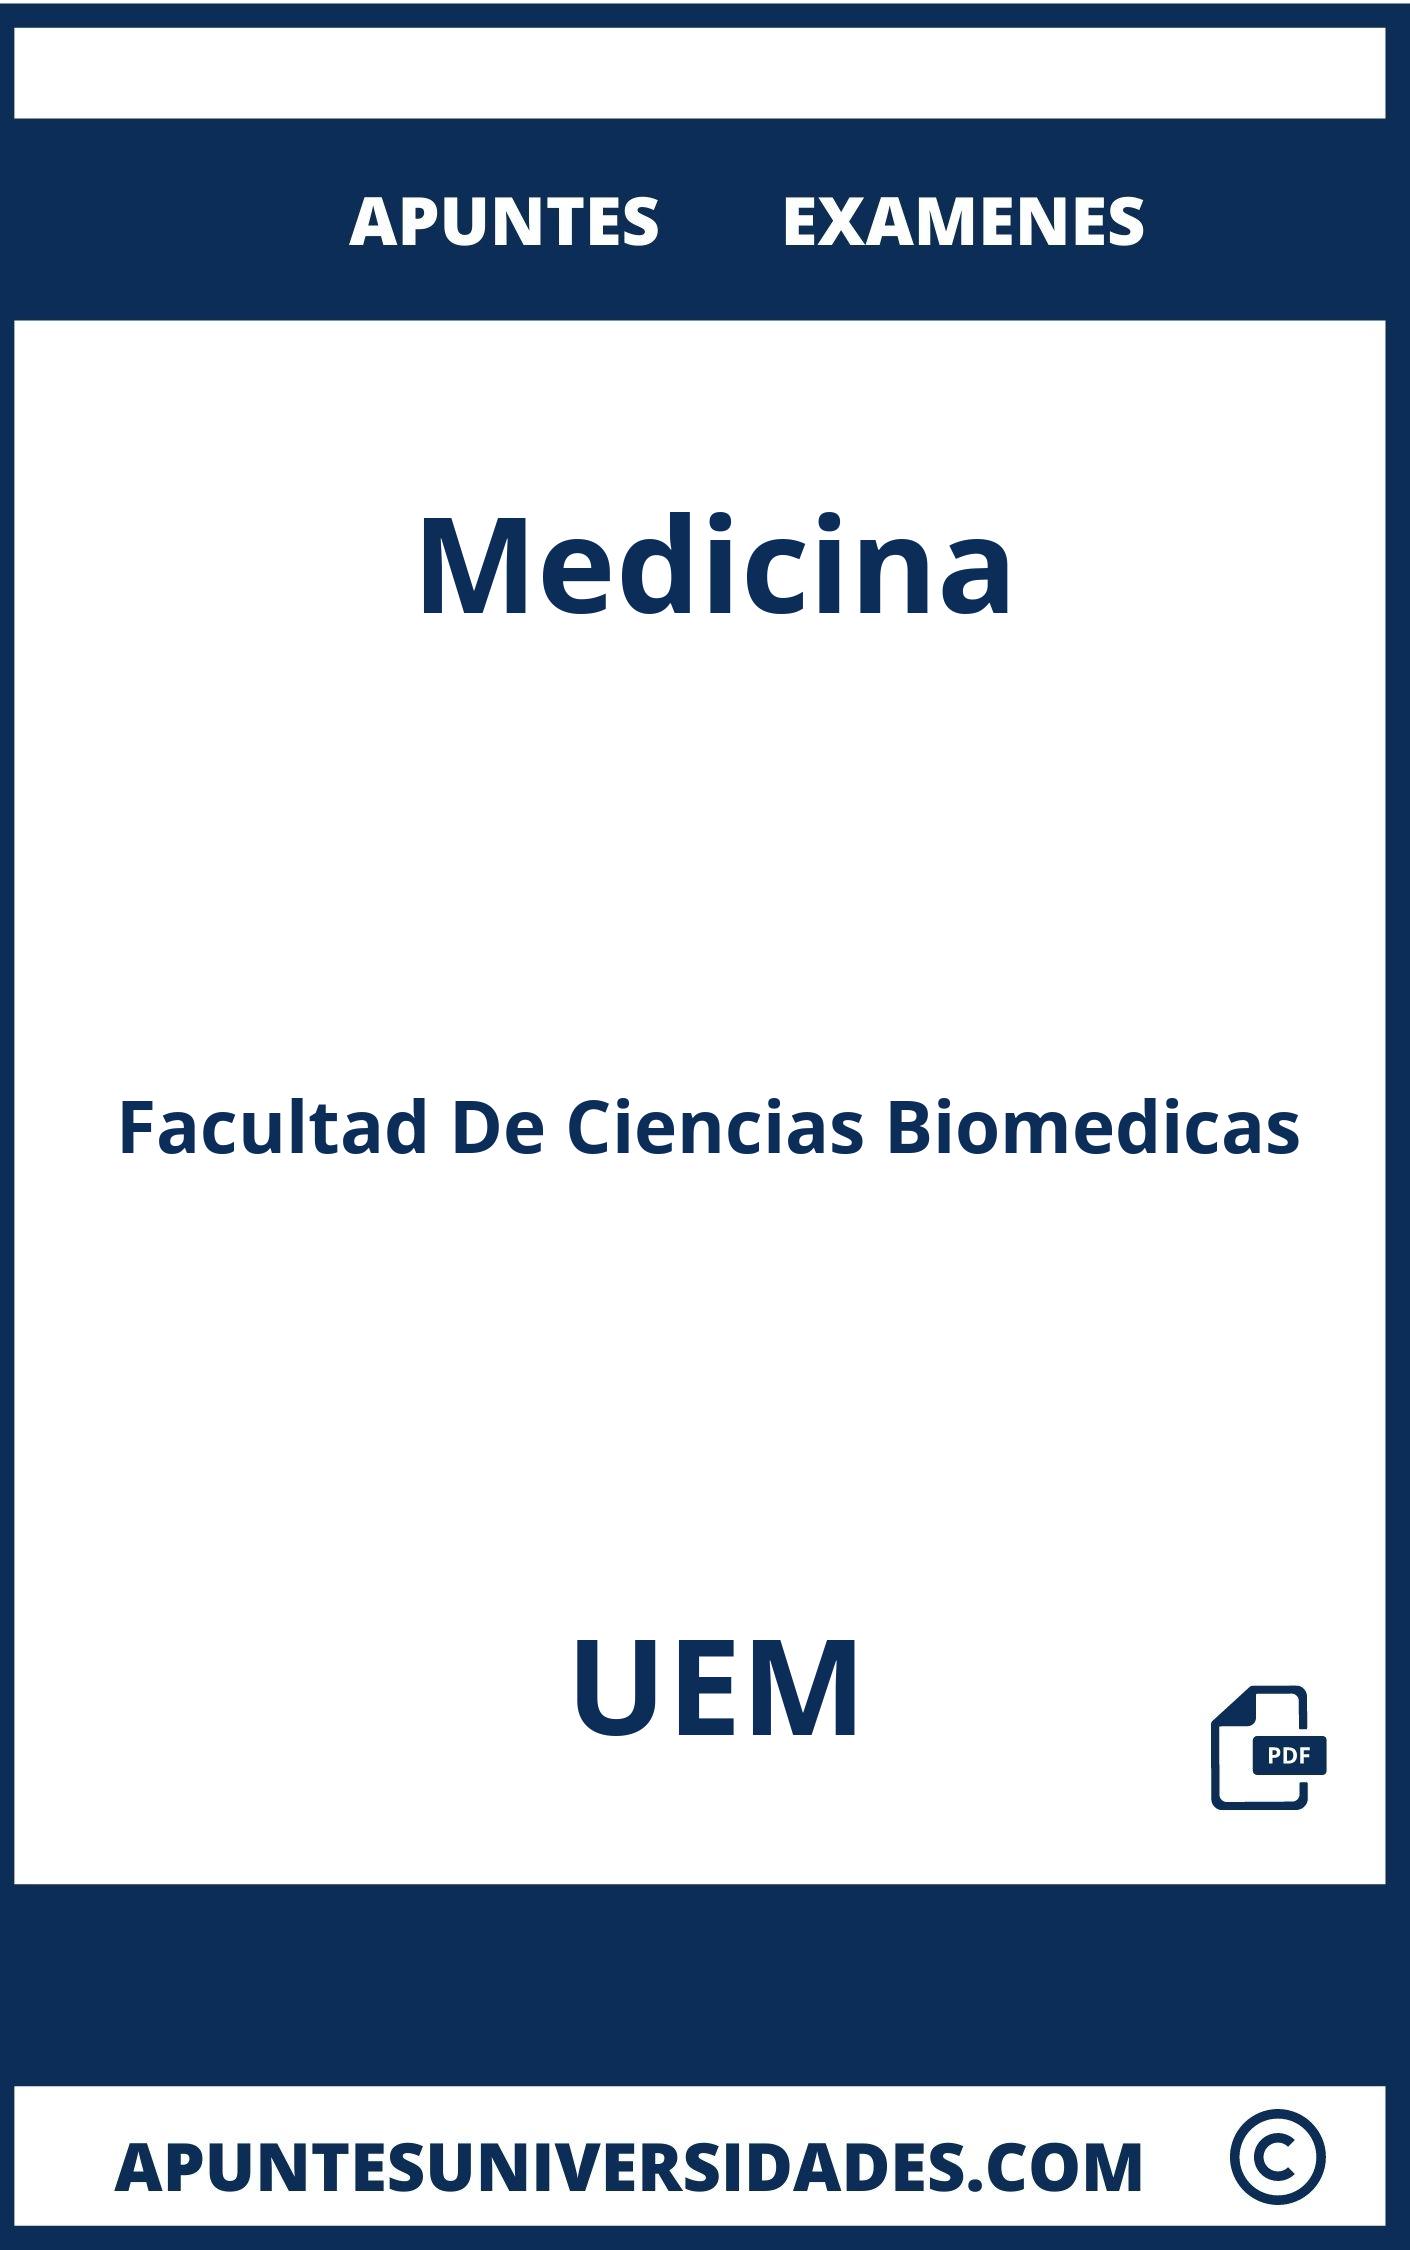 Examenes Apuntes Medicina UEM